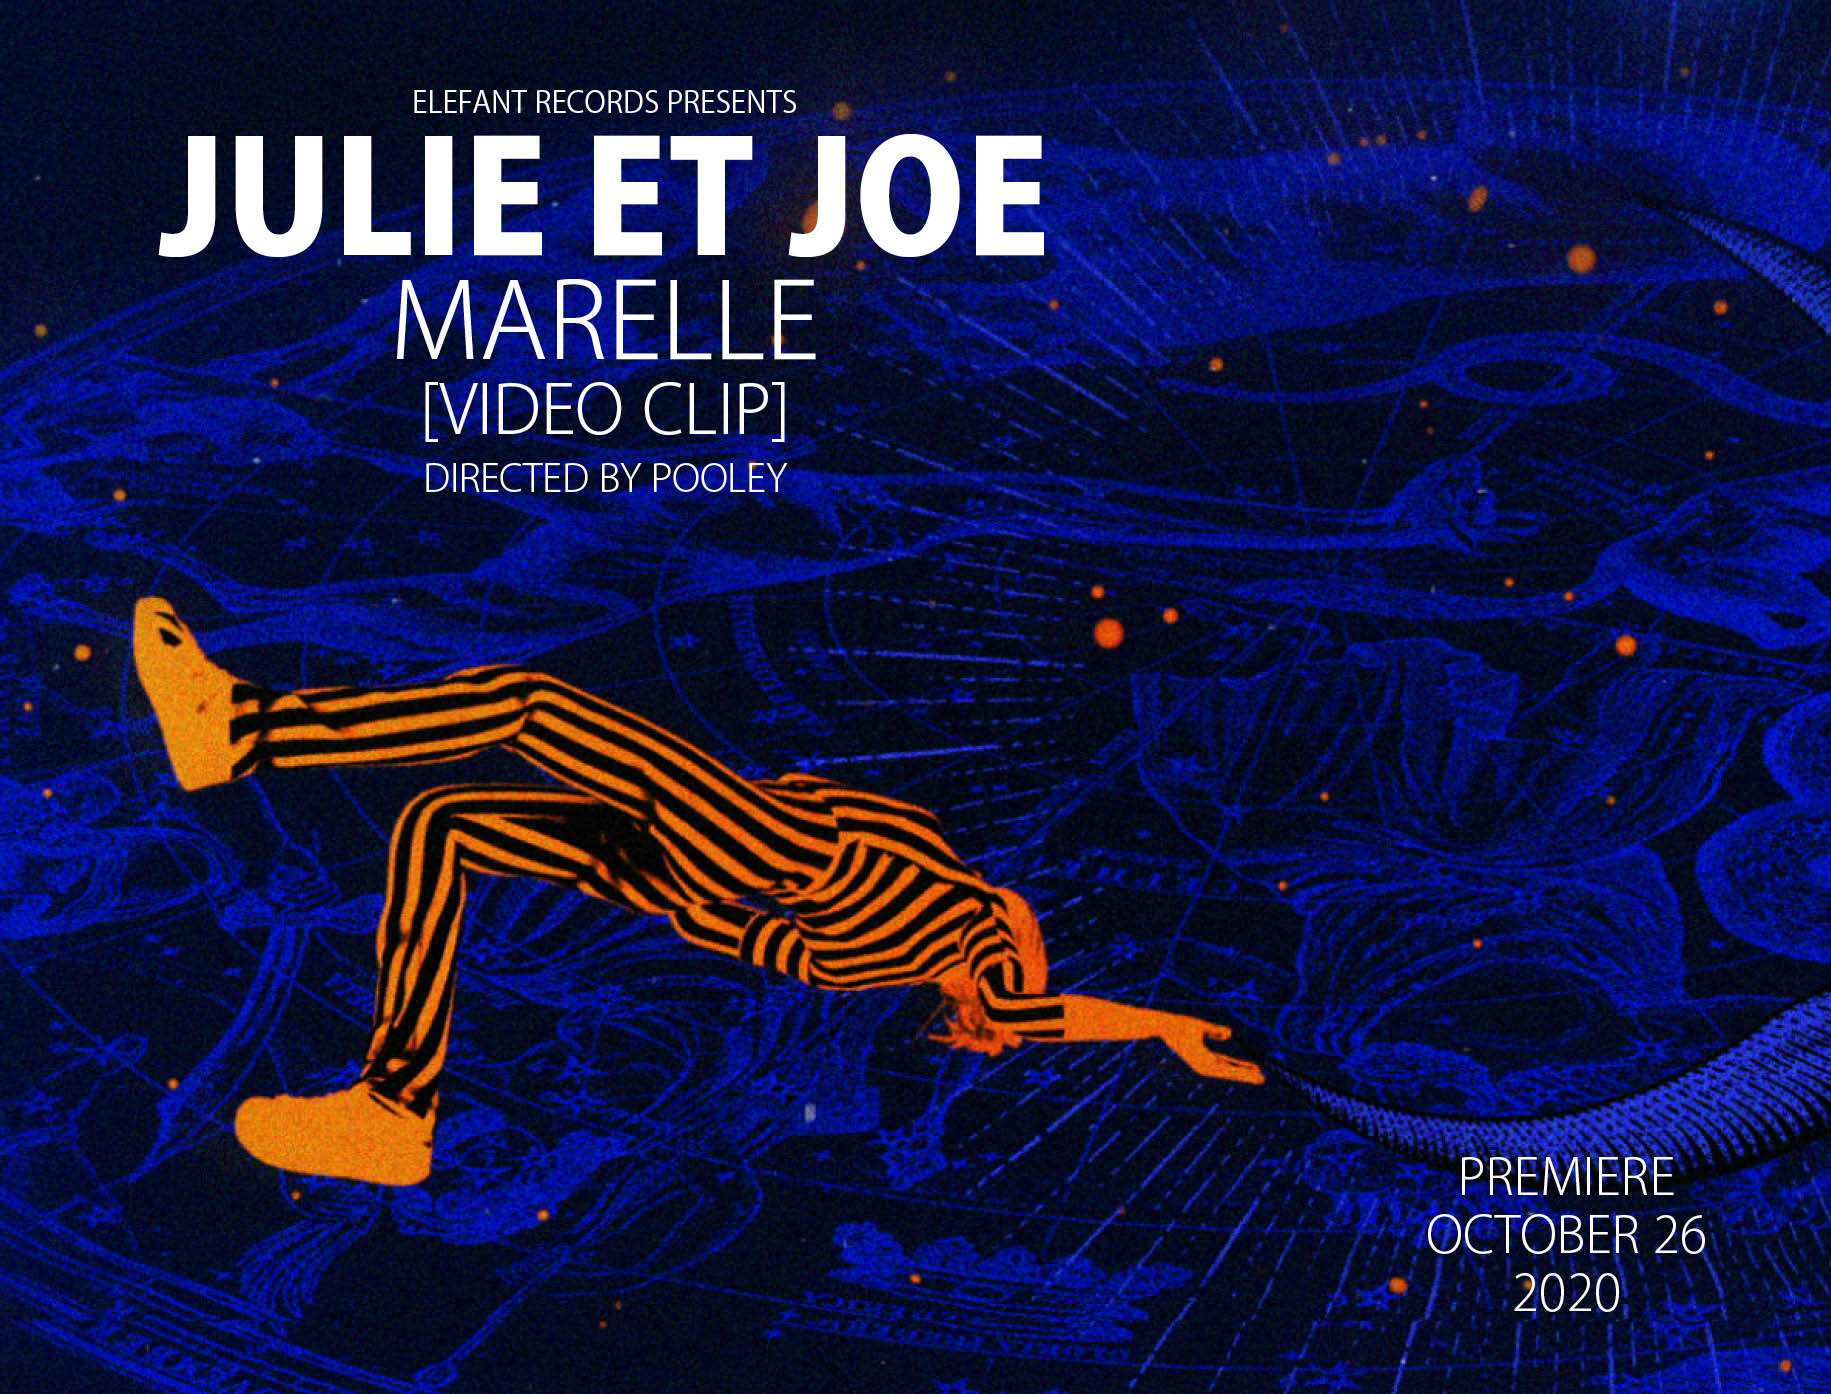 Julie Et Joe "Marelle" 